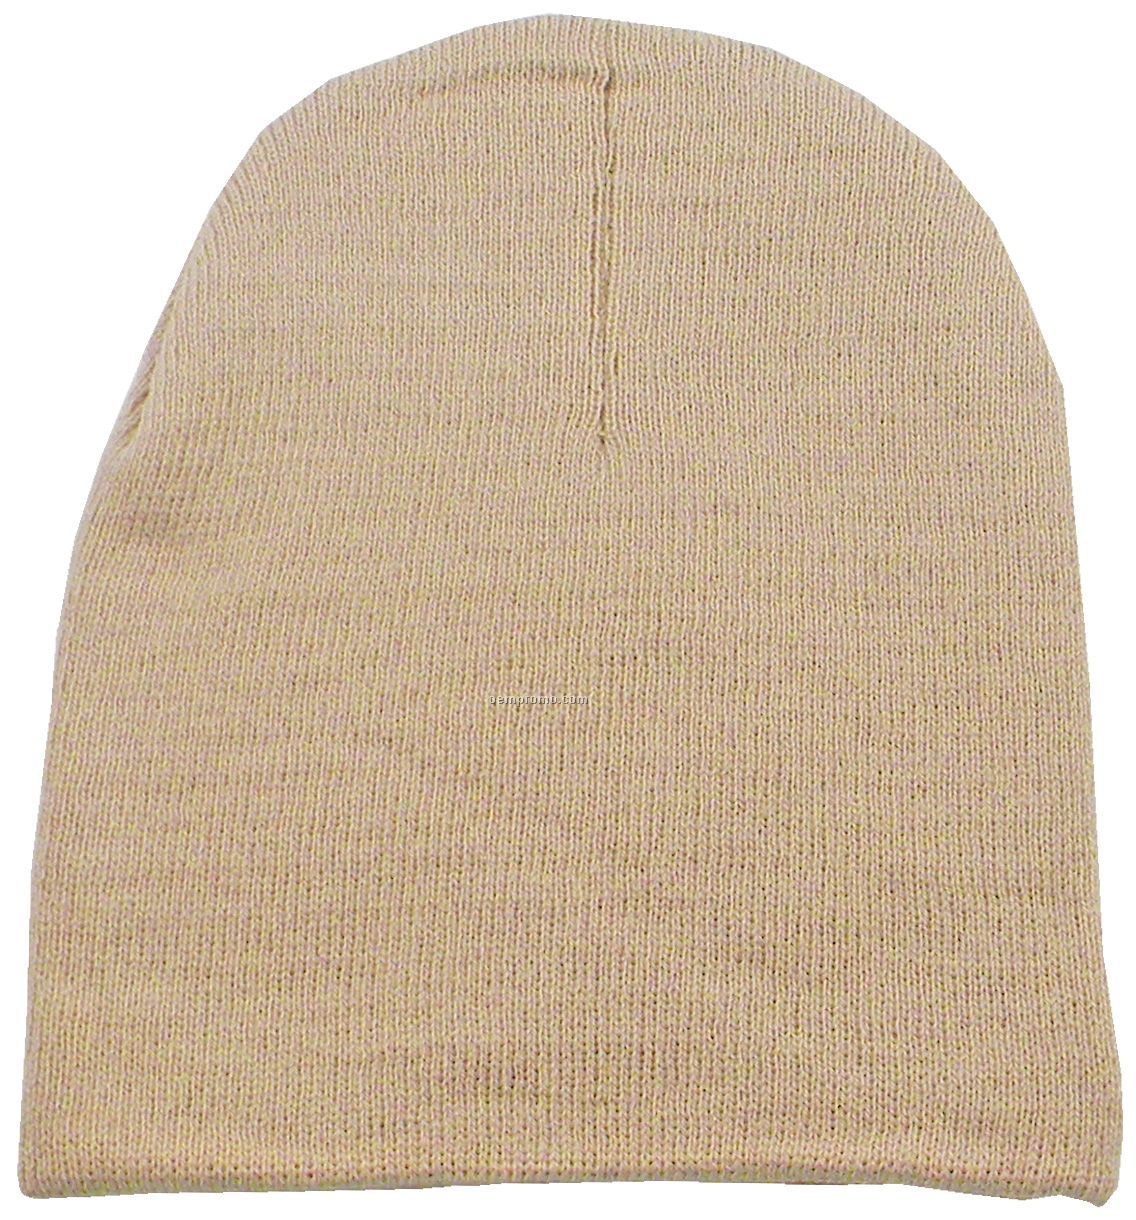 Short Knit Beanie Hat (Overseas 6-7 Week Delivery)